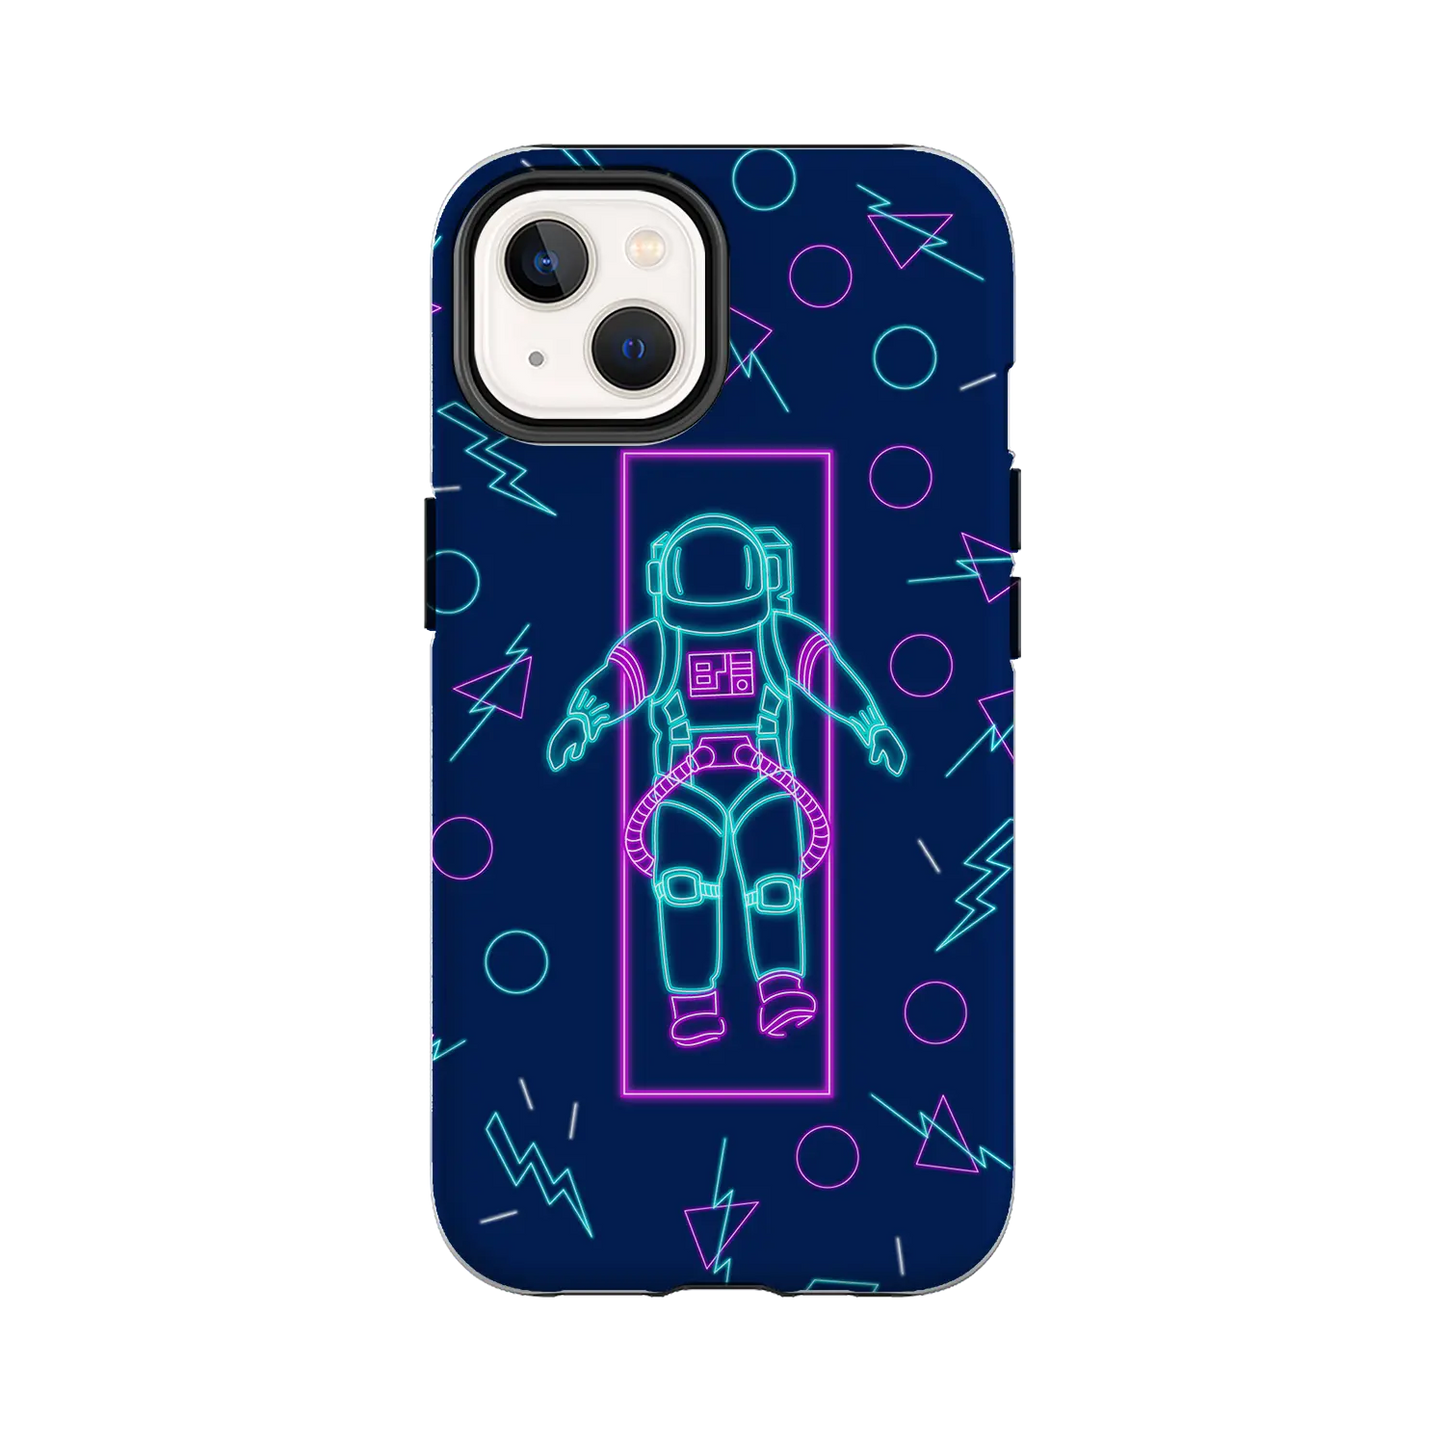 Neon Astro - Carcasa personalizada iPhone